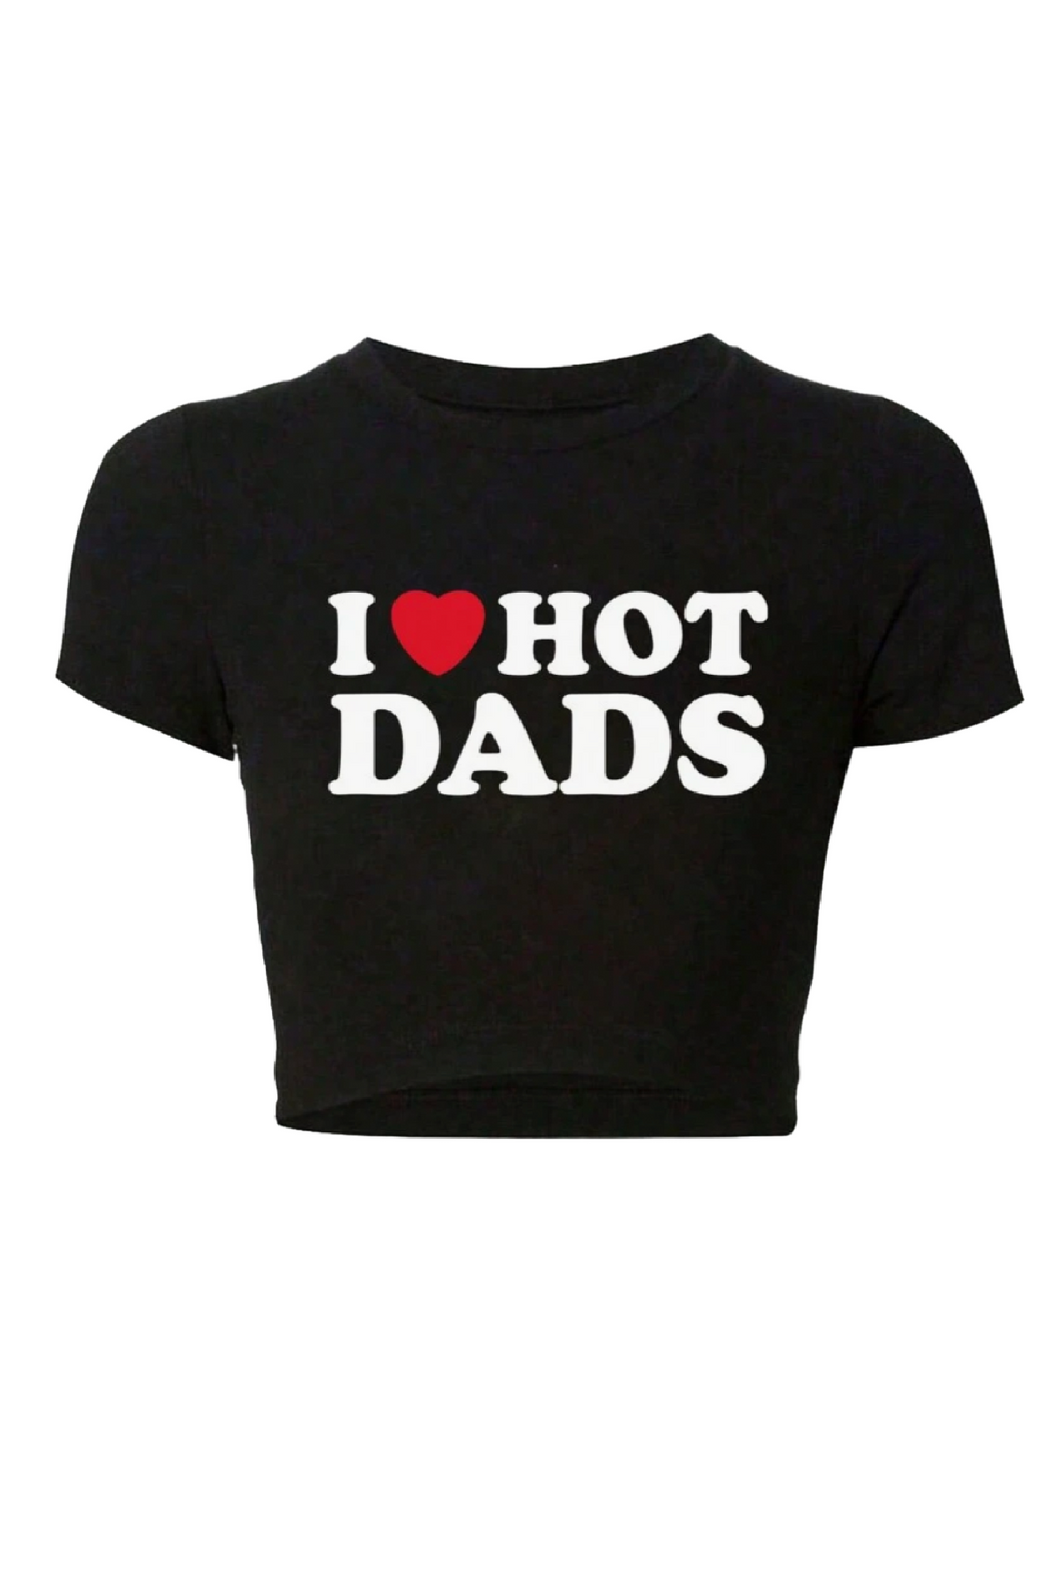 Hot Dads Crop Top (Black)